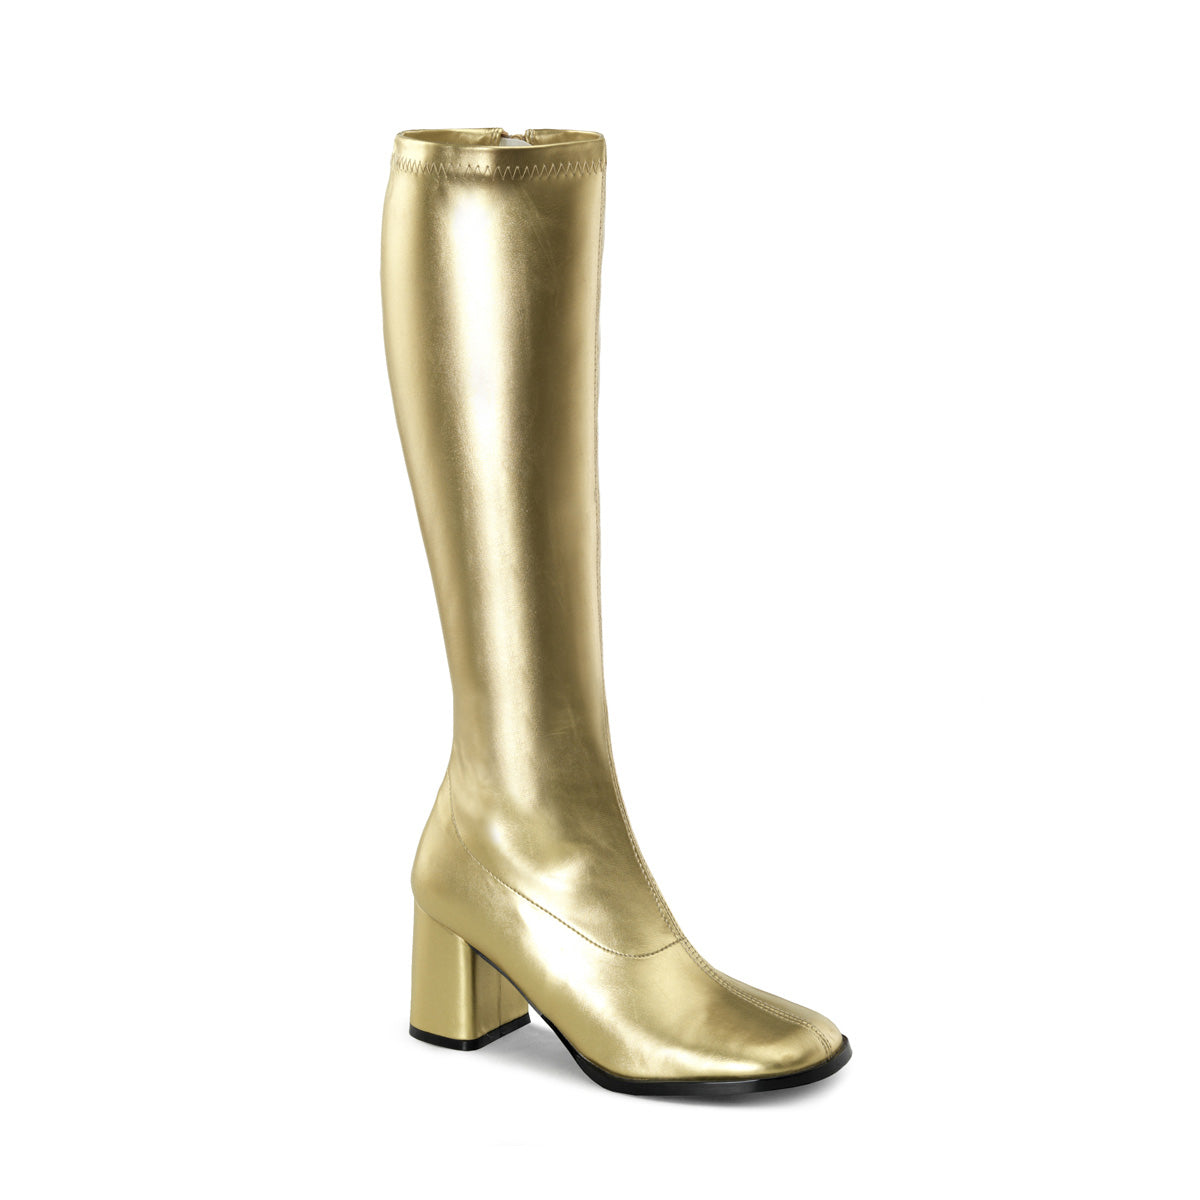 GOGO-300 3 Inch Heel Gold Women's Boots Funtasma Costume Shoes